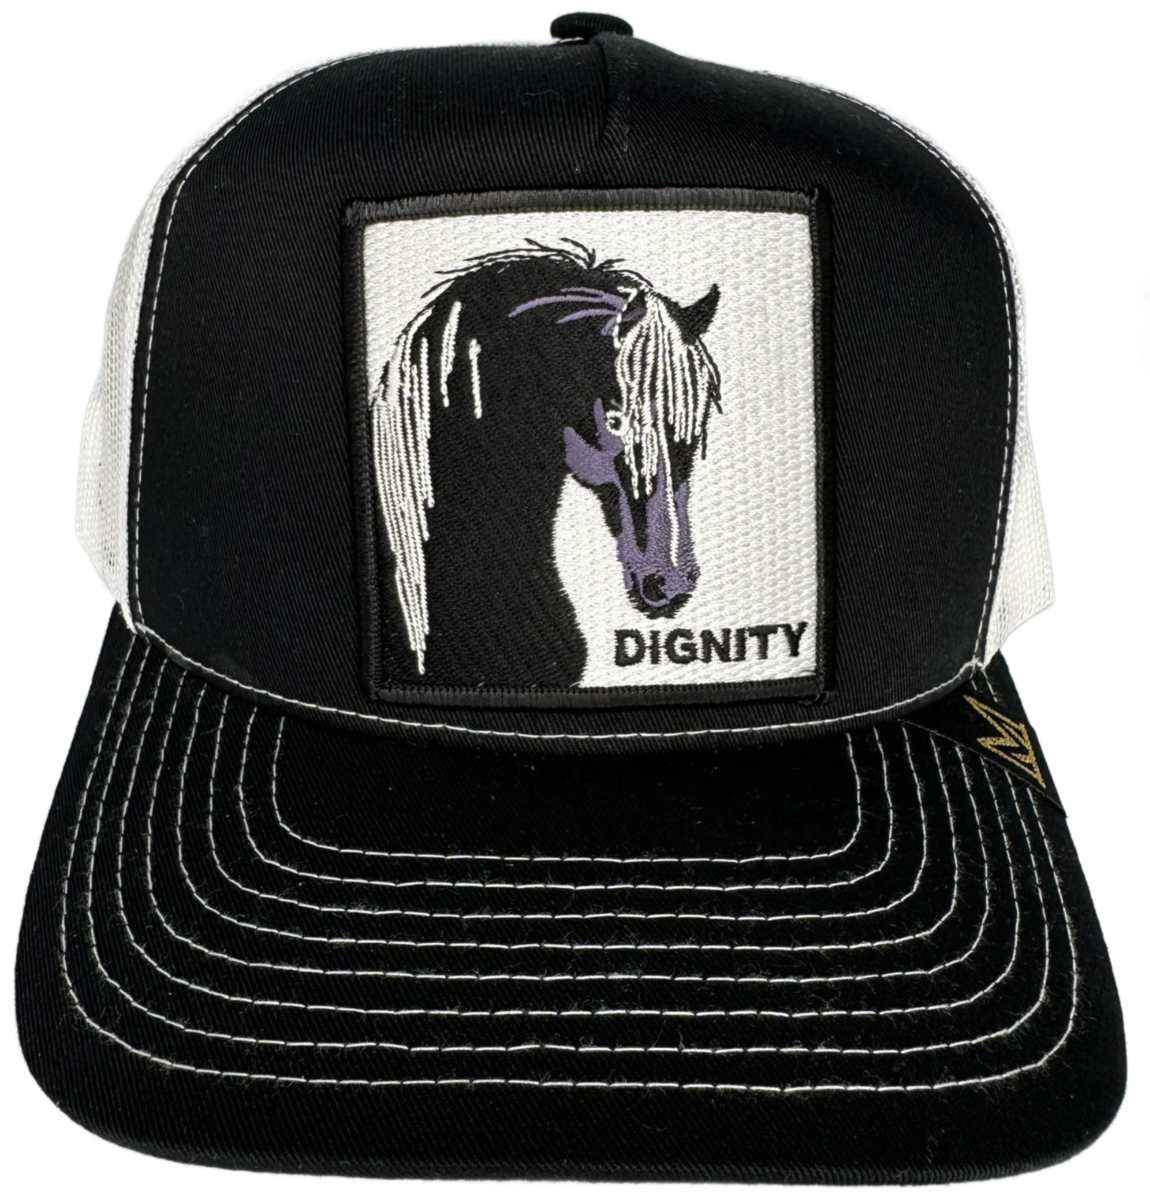 MV Dad Hats - Dignity Trucker Hat - Black/White